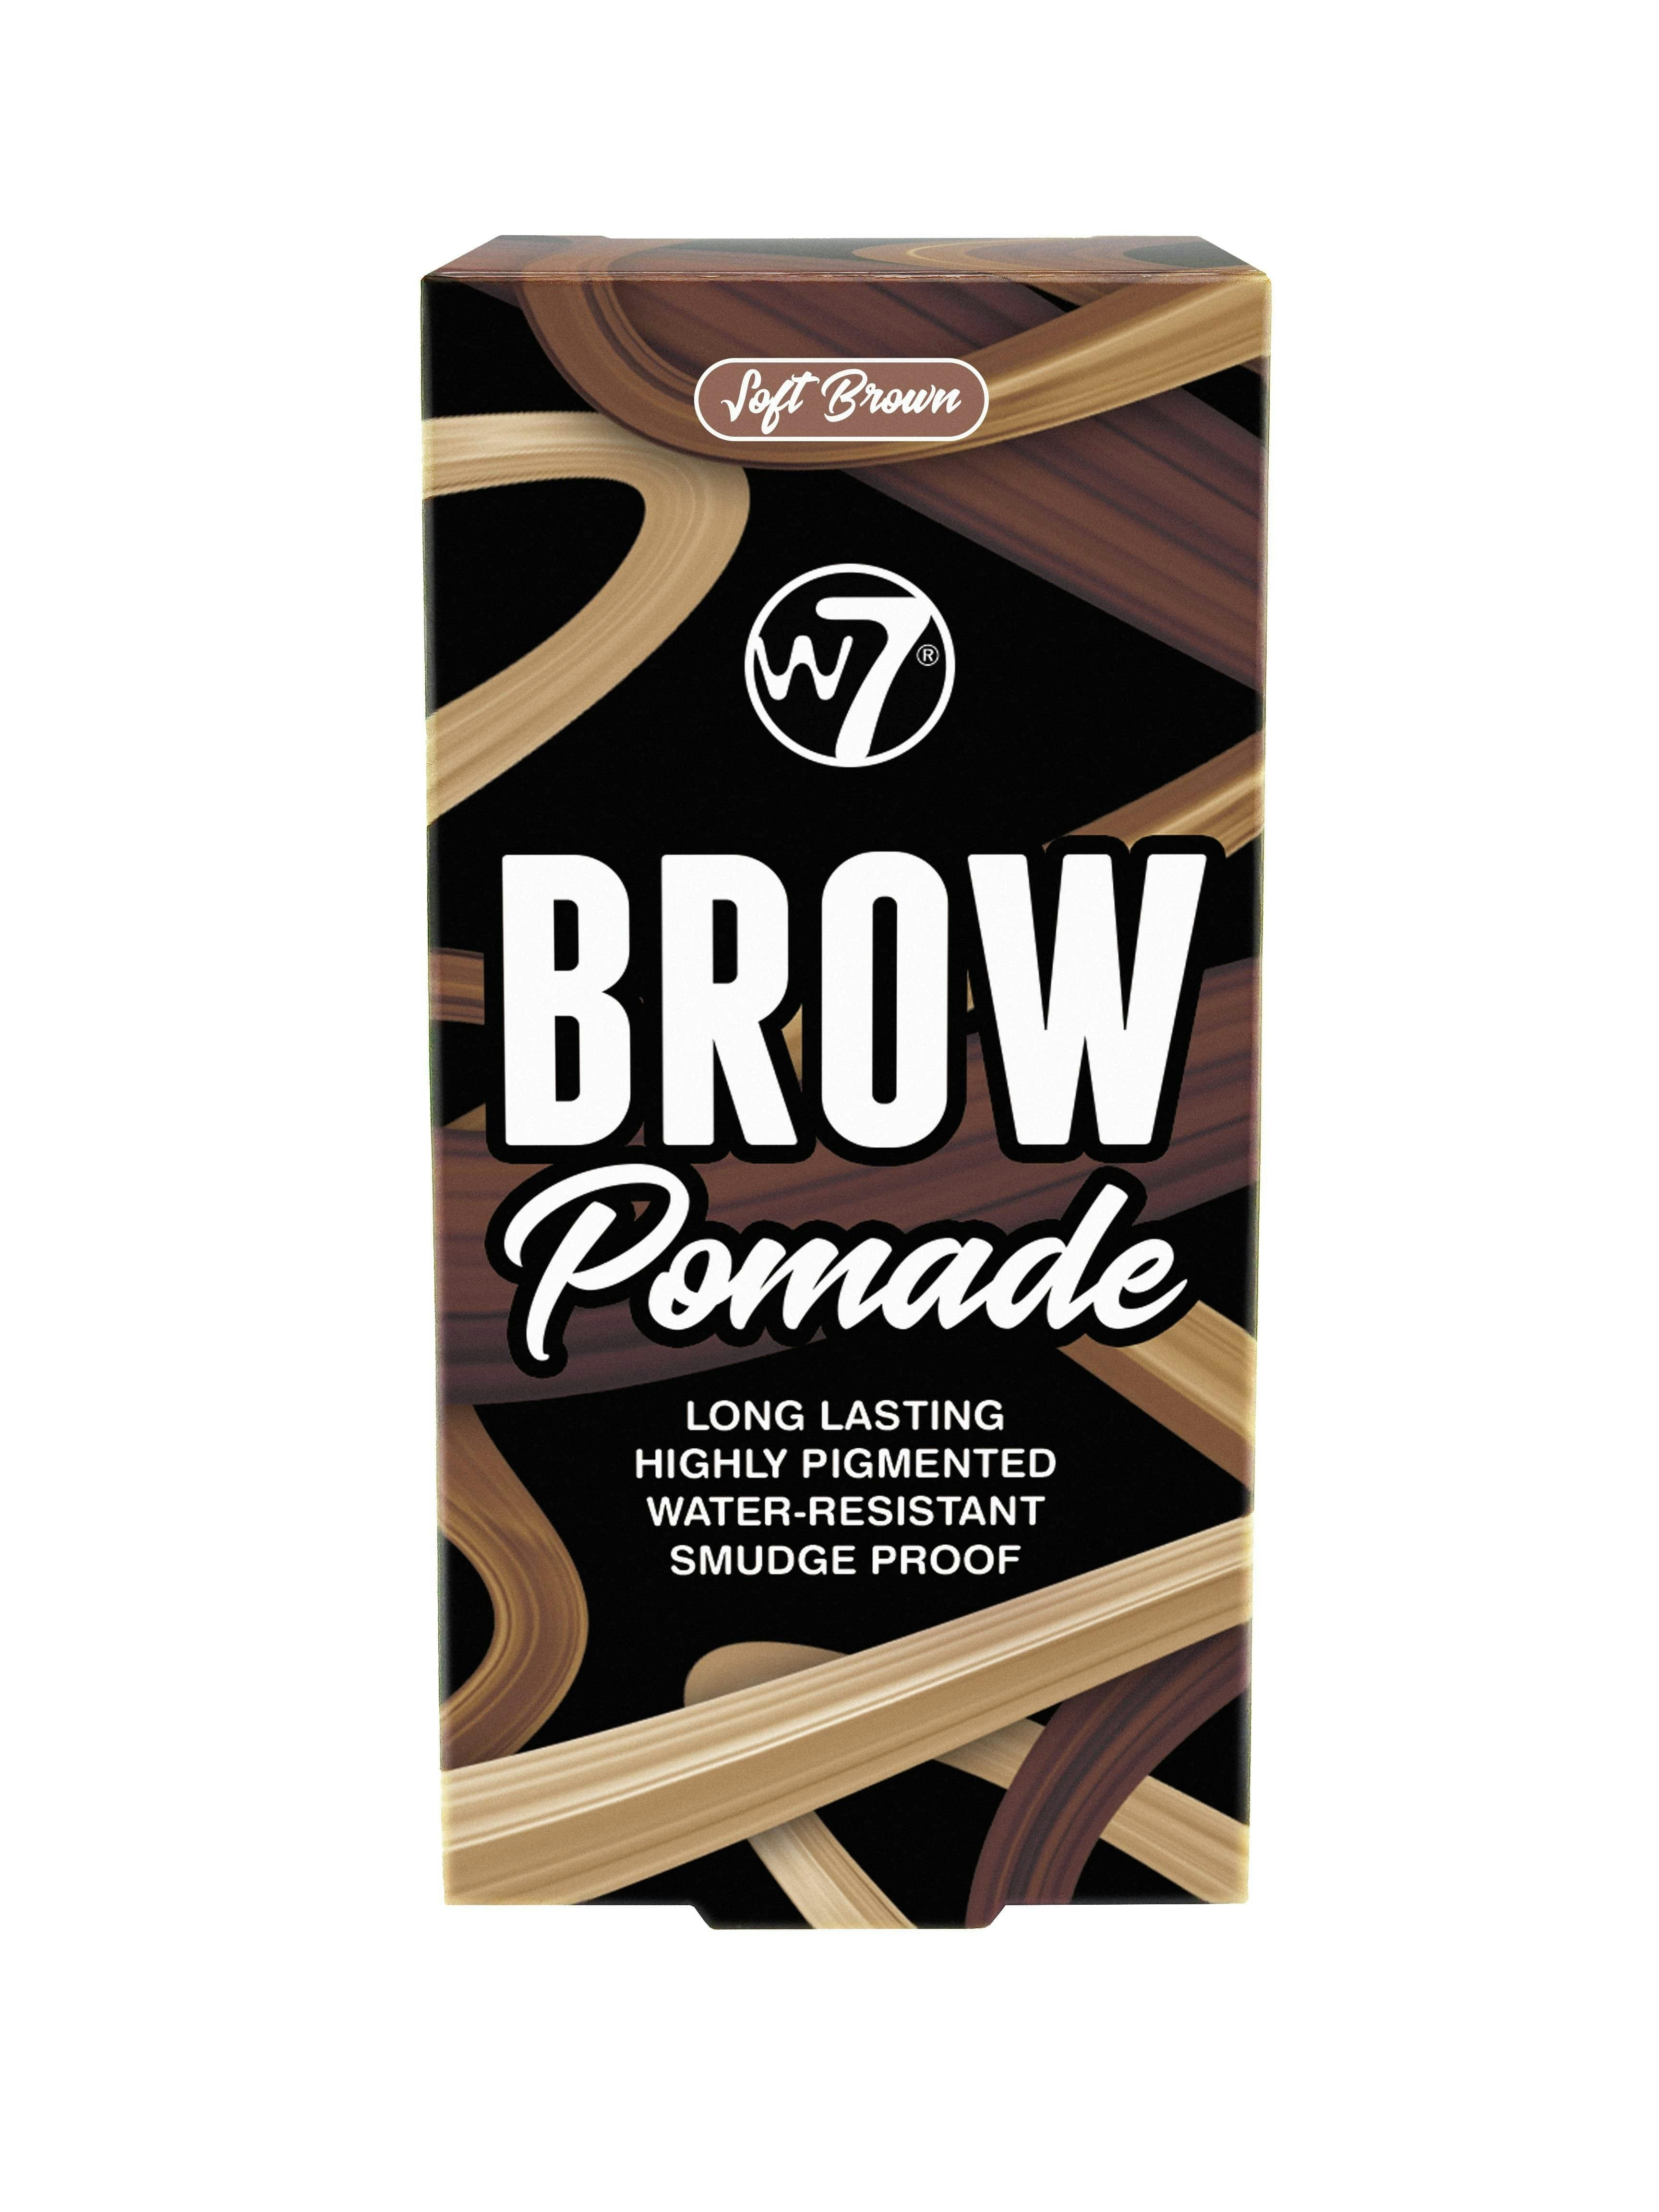 W7 Brow Pomade Soft Brown 4,25 g